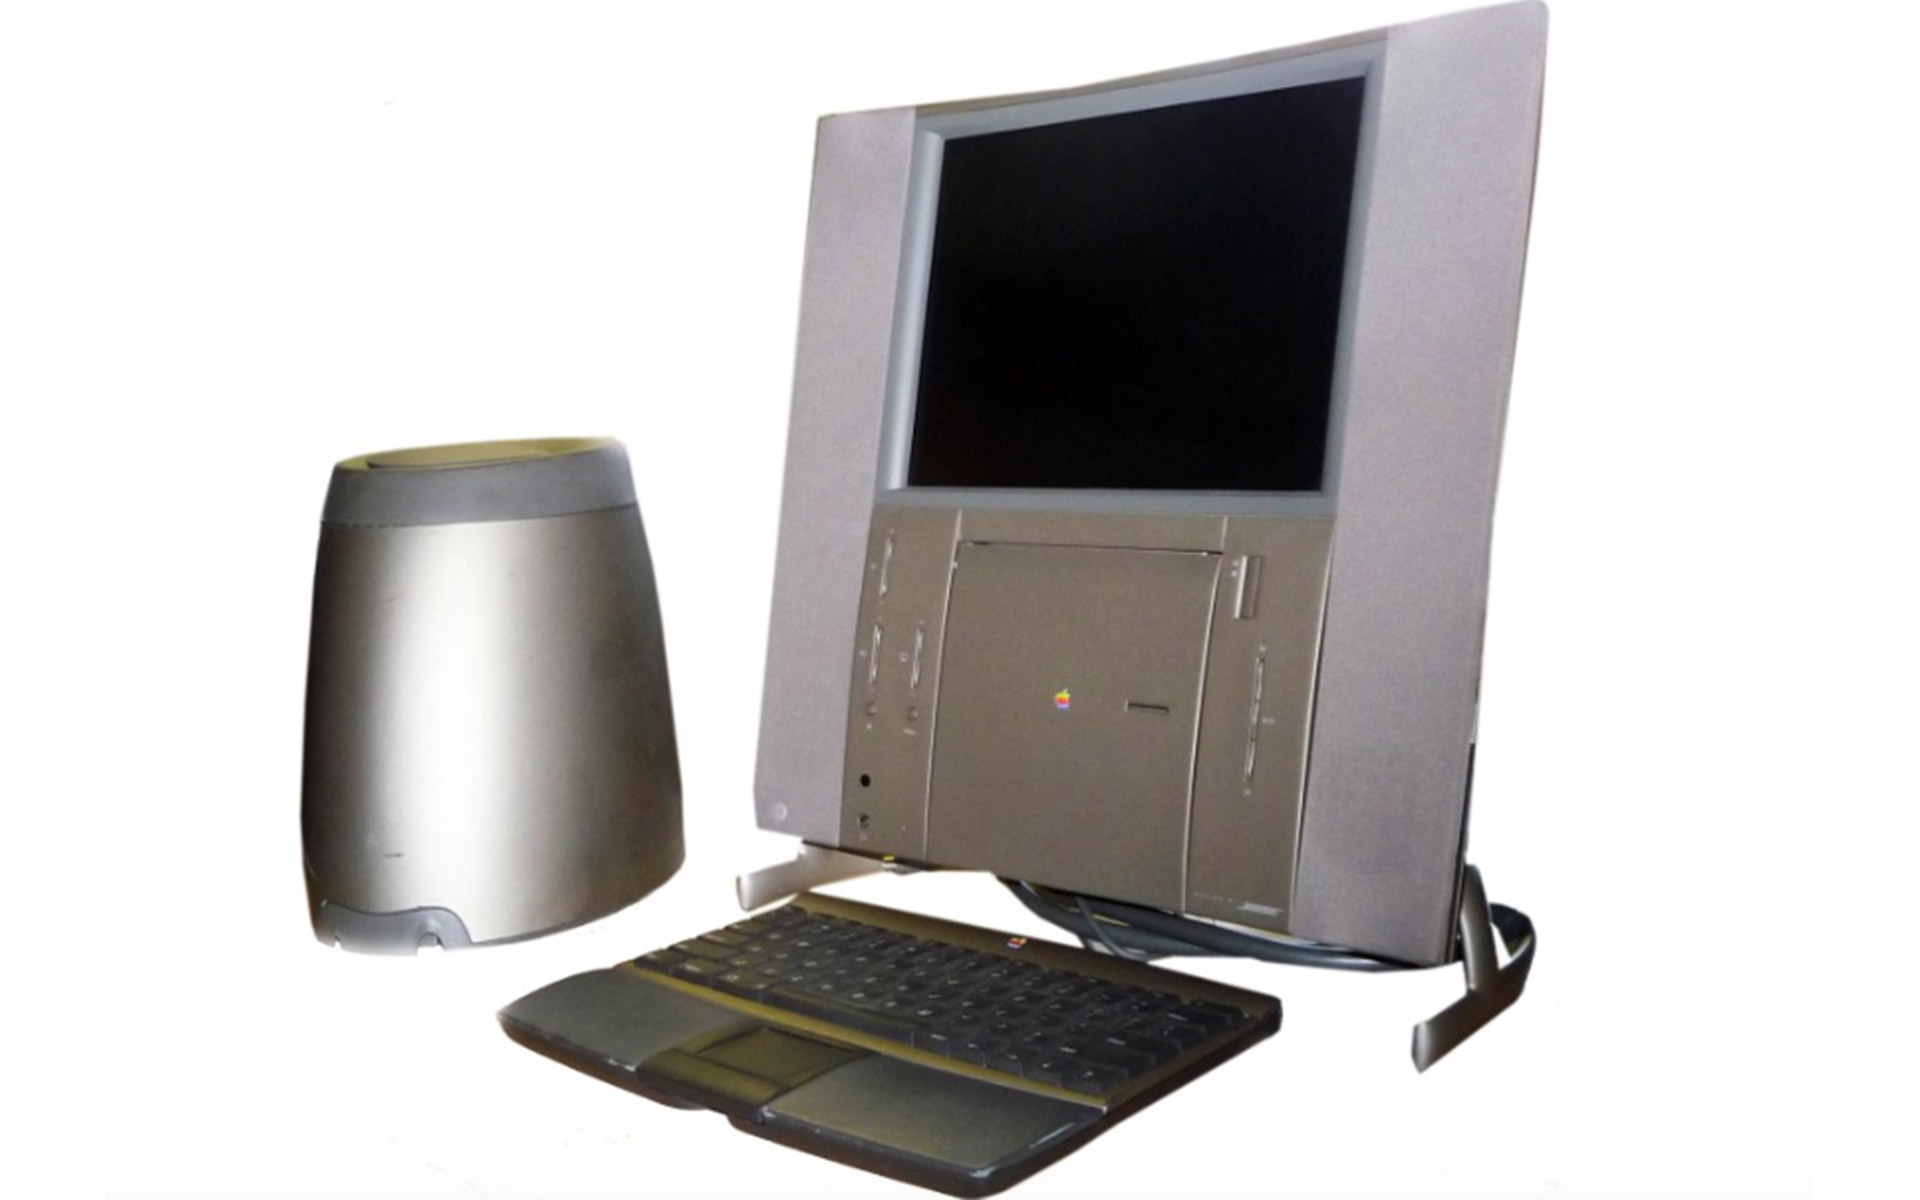 Macintosh 20th anniversary with keyboard